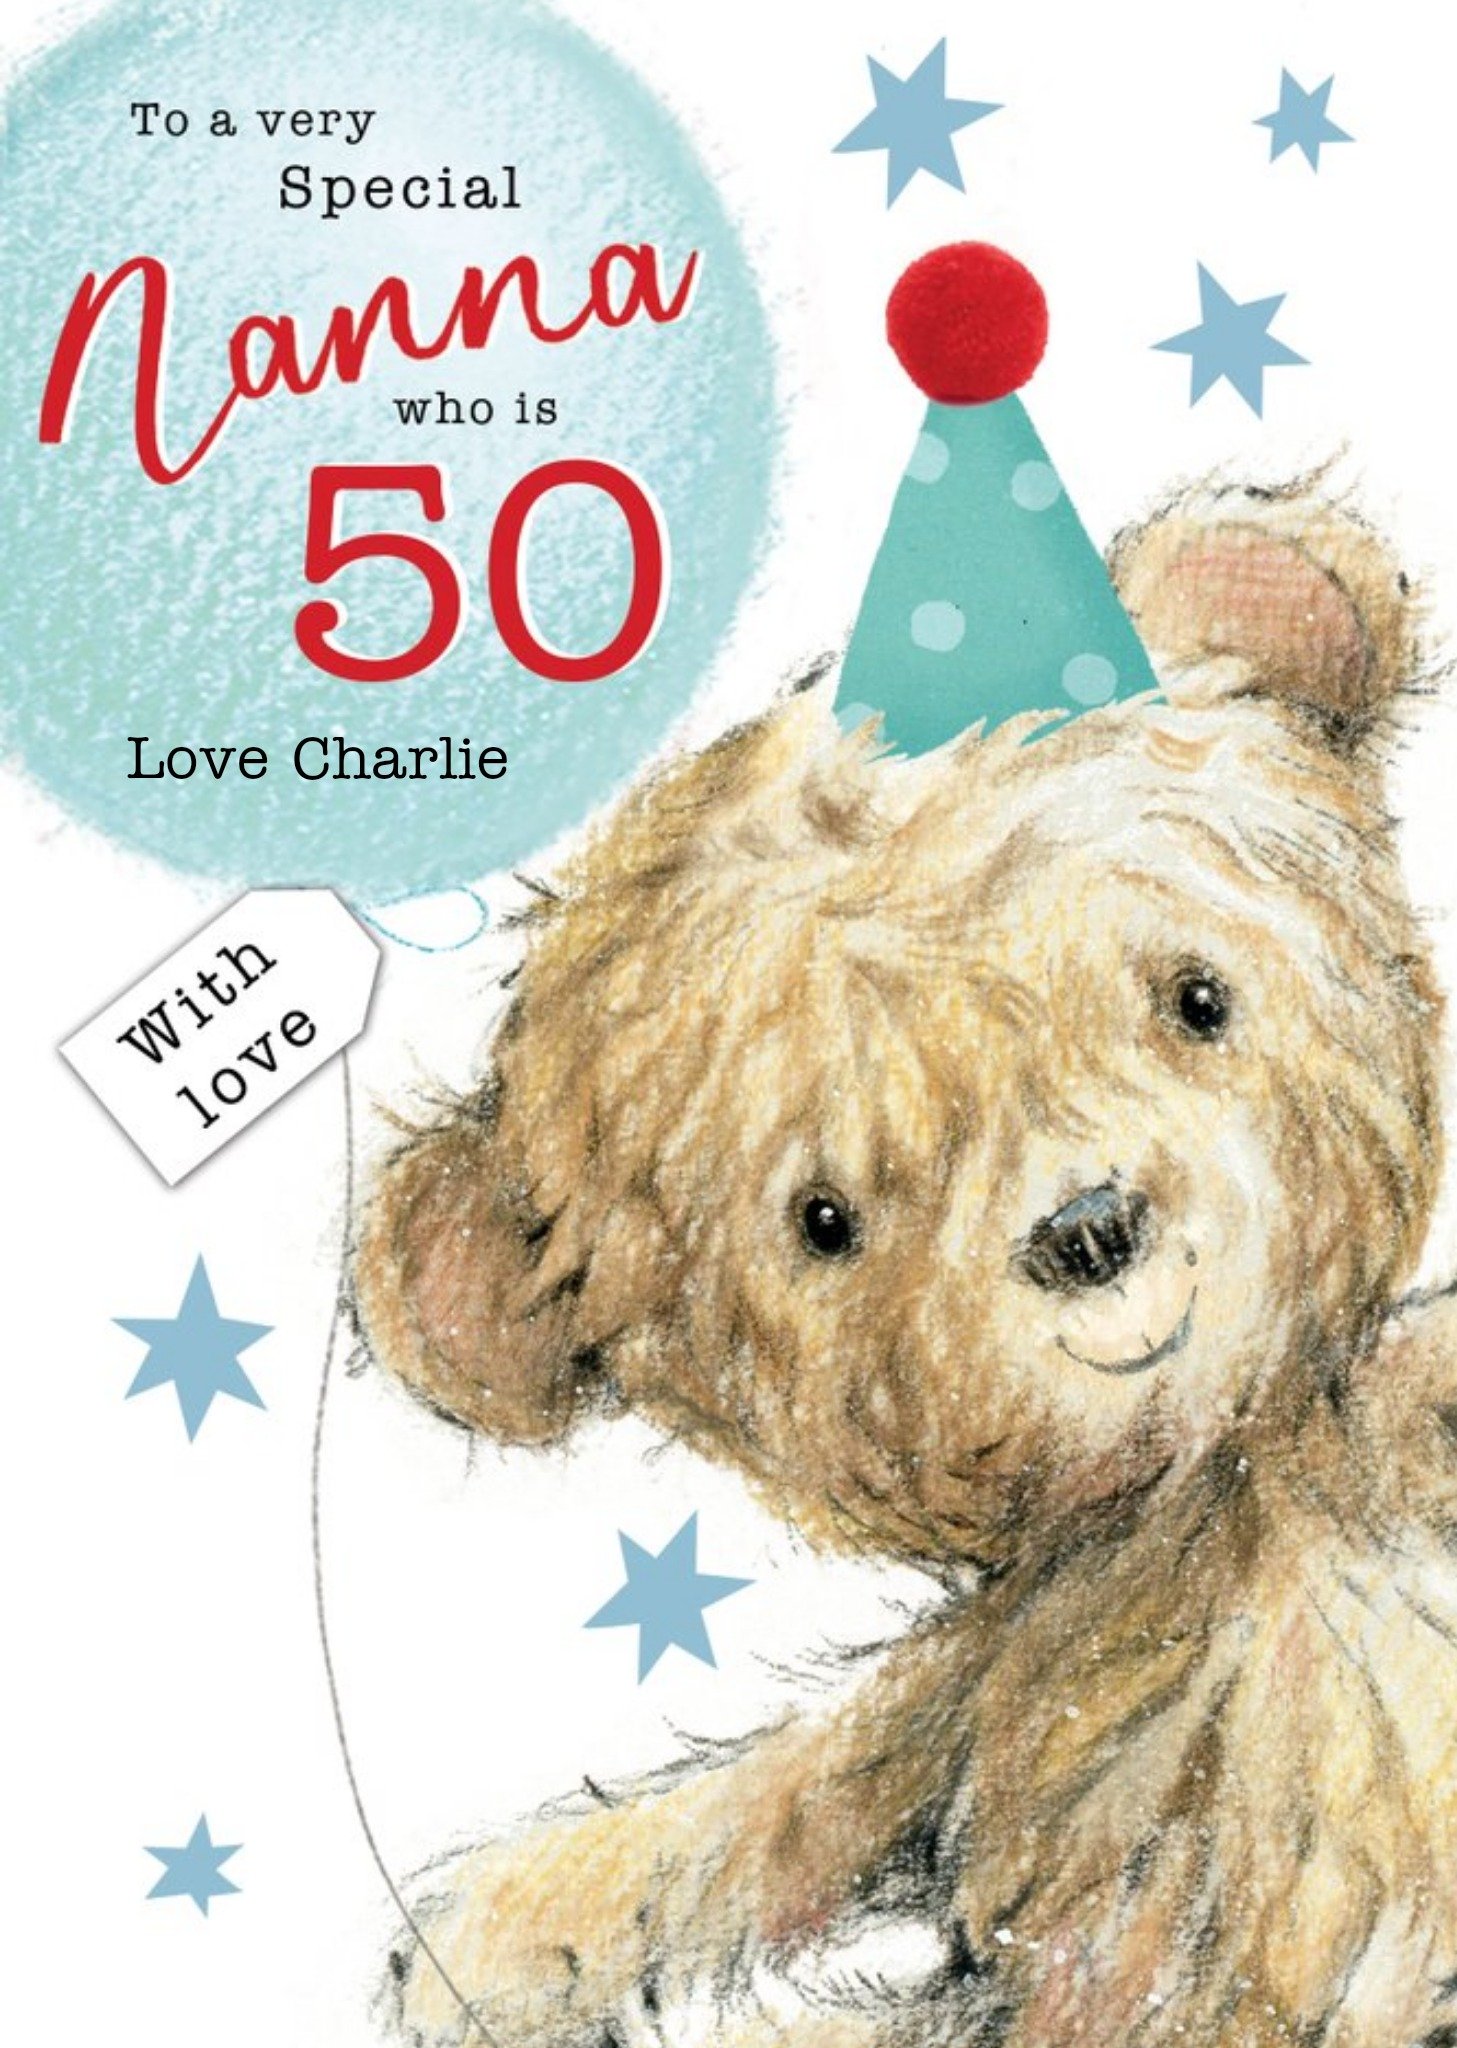 Moonpig Clintons Nanna Illustrated Teddy Bear 50th Birthday Card, Large